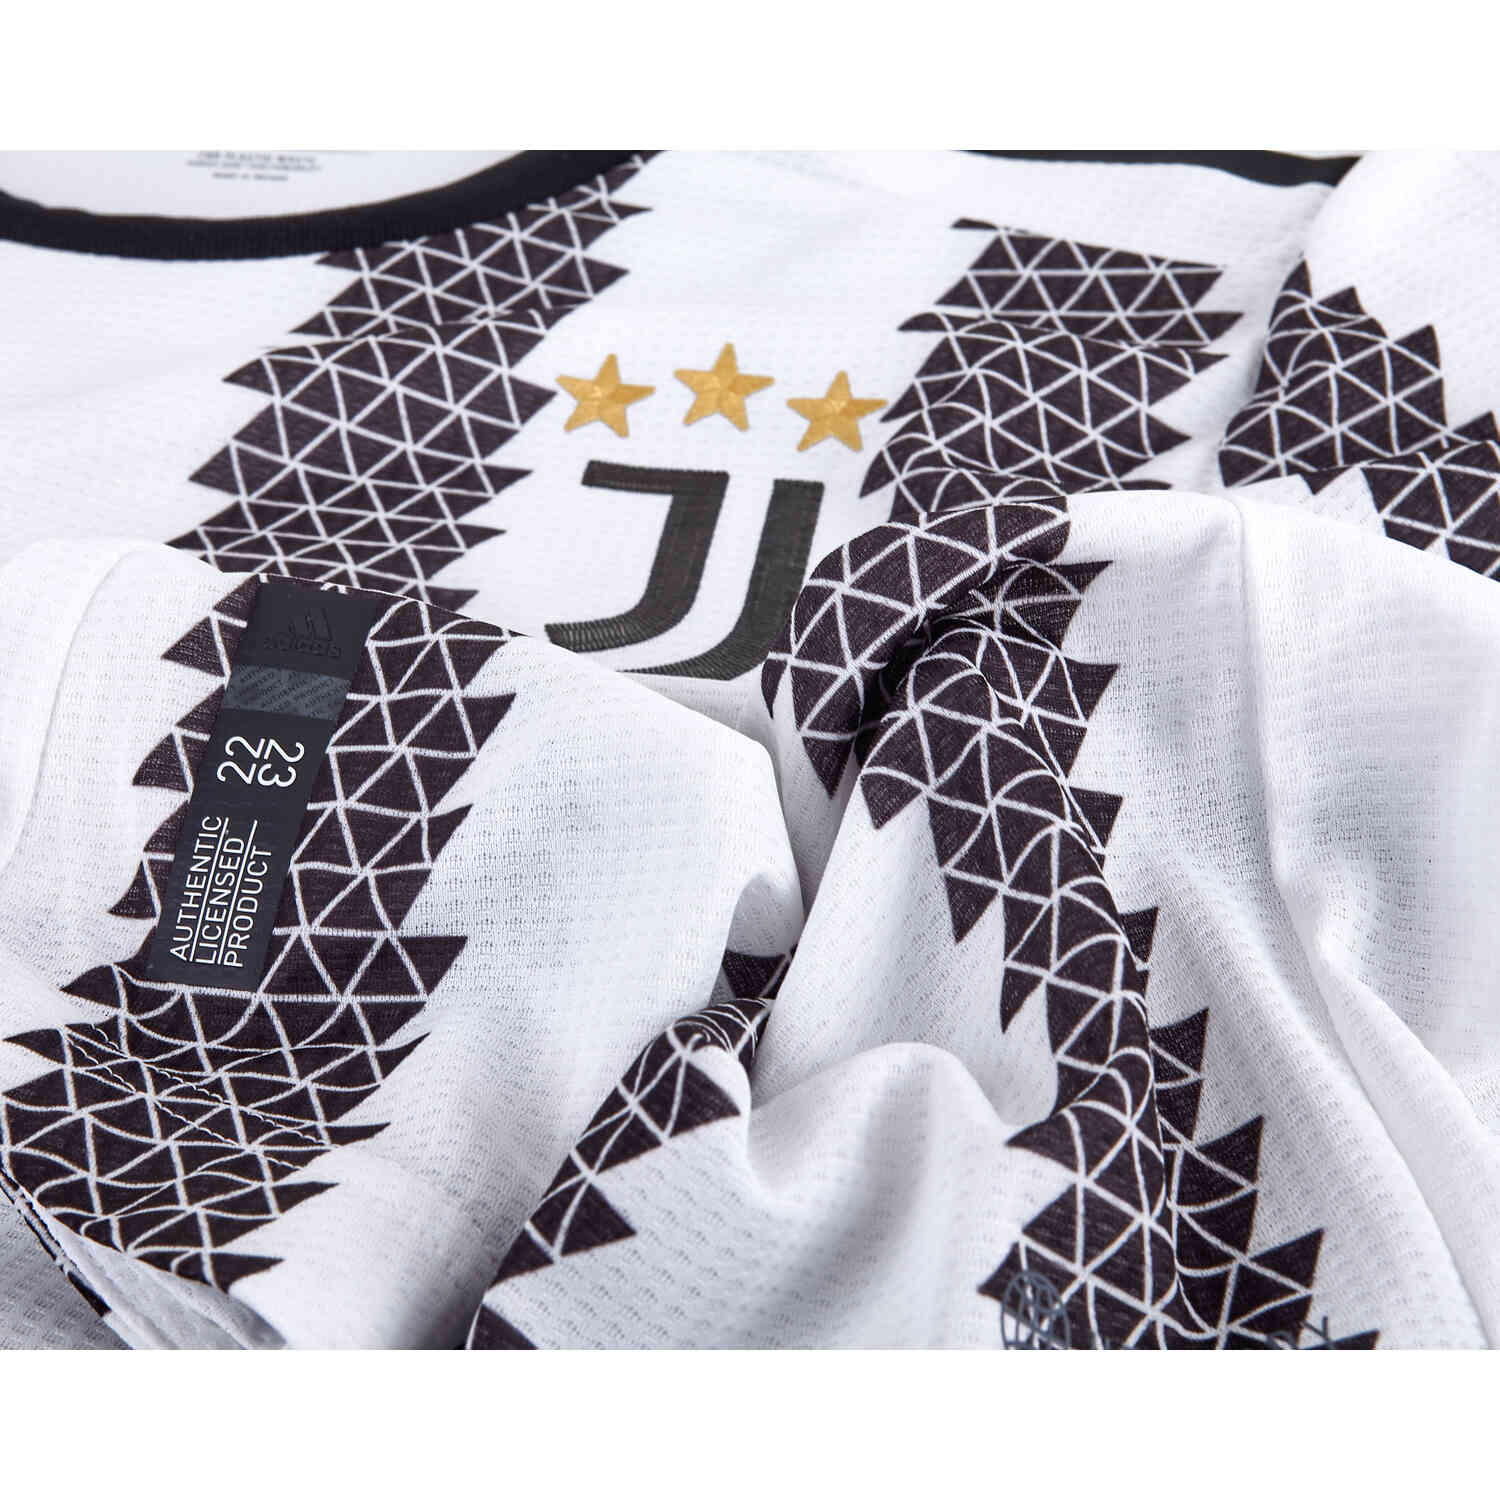 2022/23 adidas Juventus Home Authentic Jersey - SoccerPro